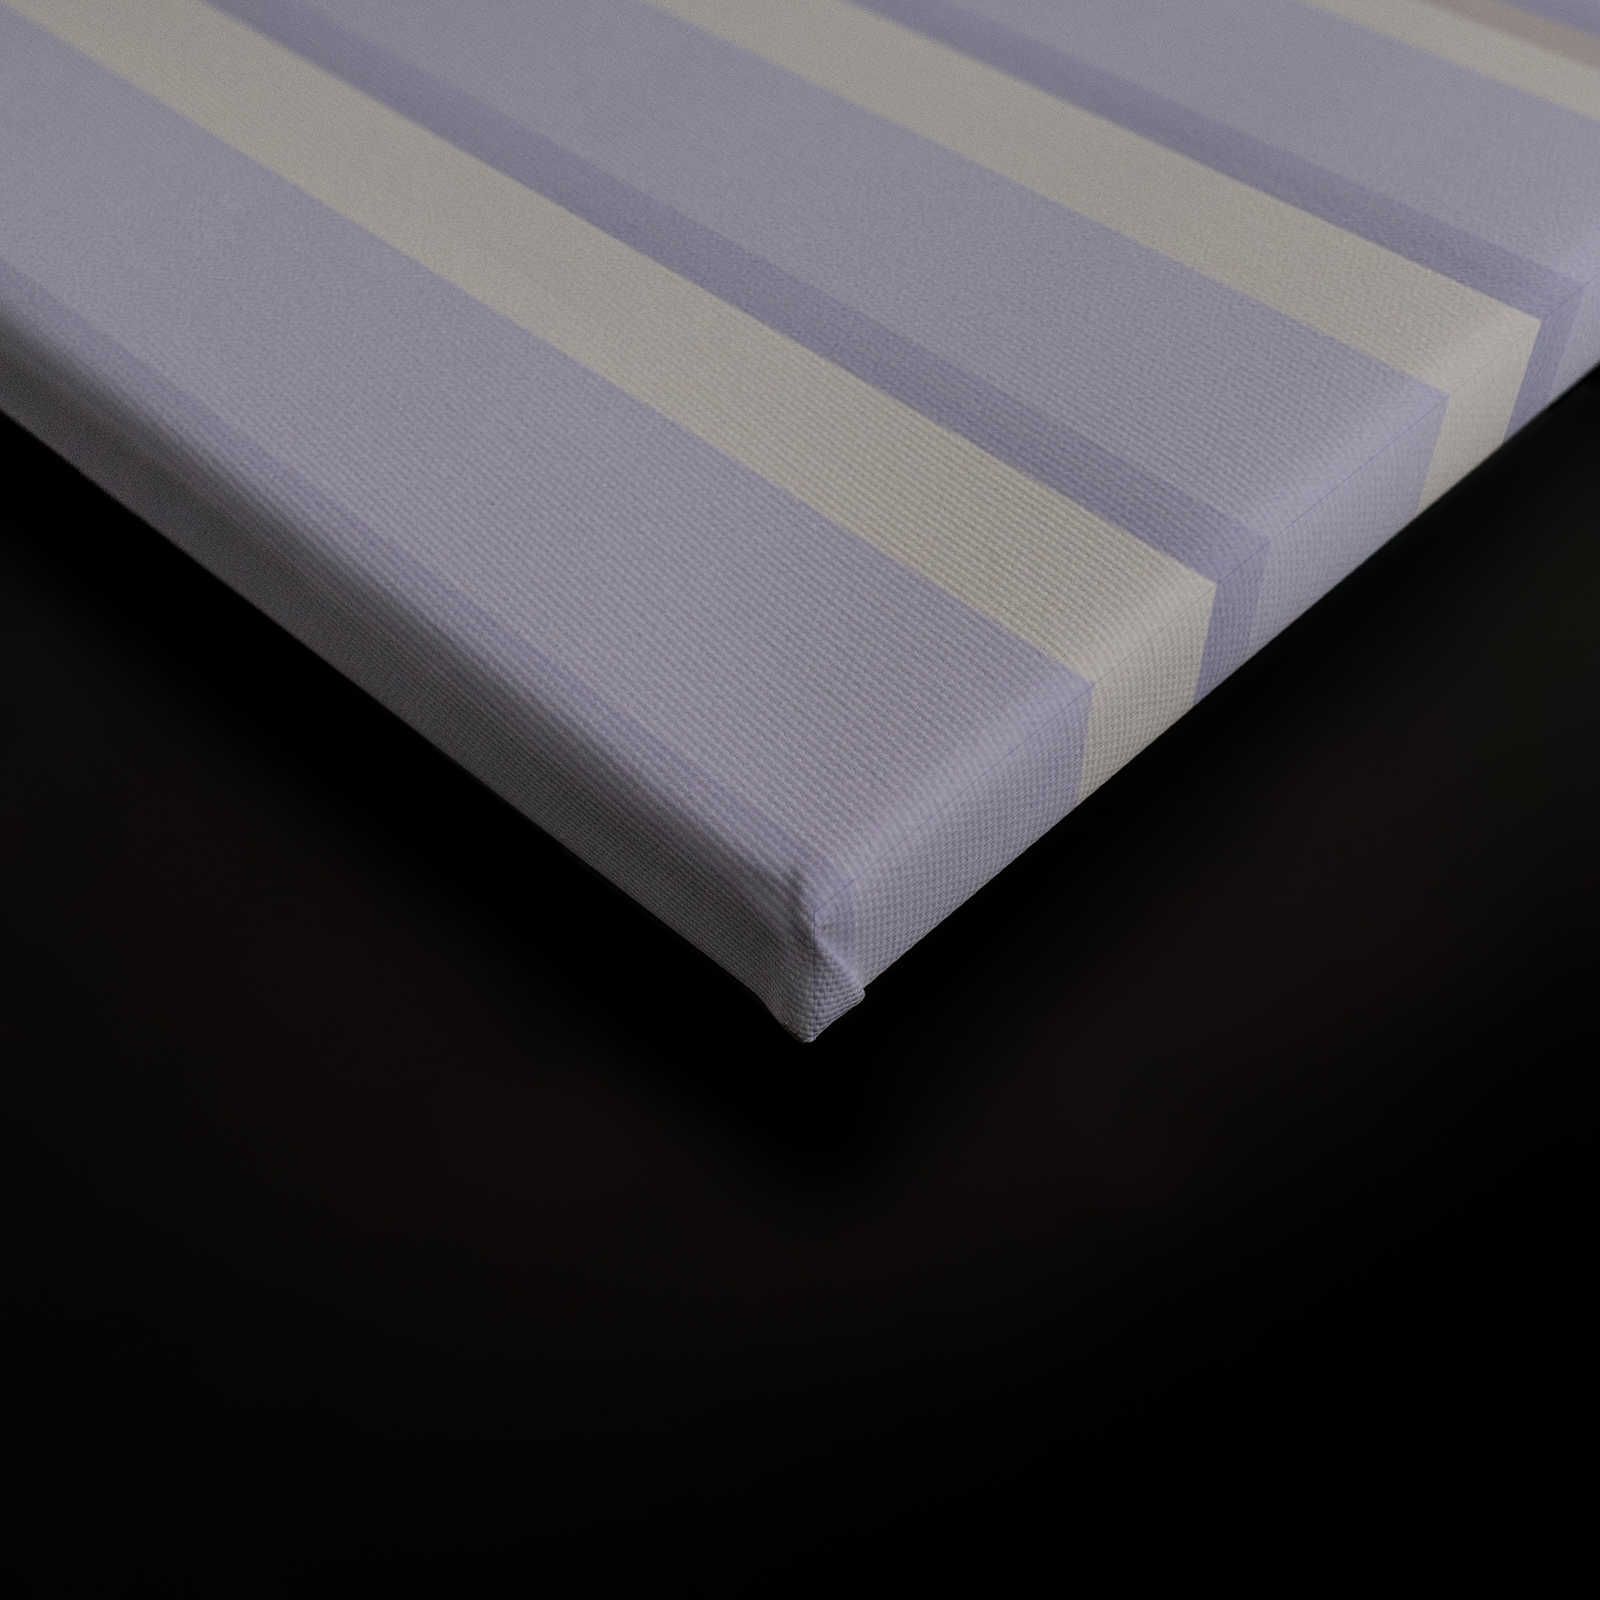             Illusion Room 1 - Canvas painting 3D Stripe Design in Purple & Grey - 0.90 m x 0.60 m
        